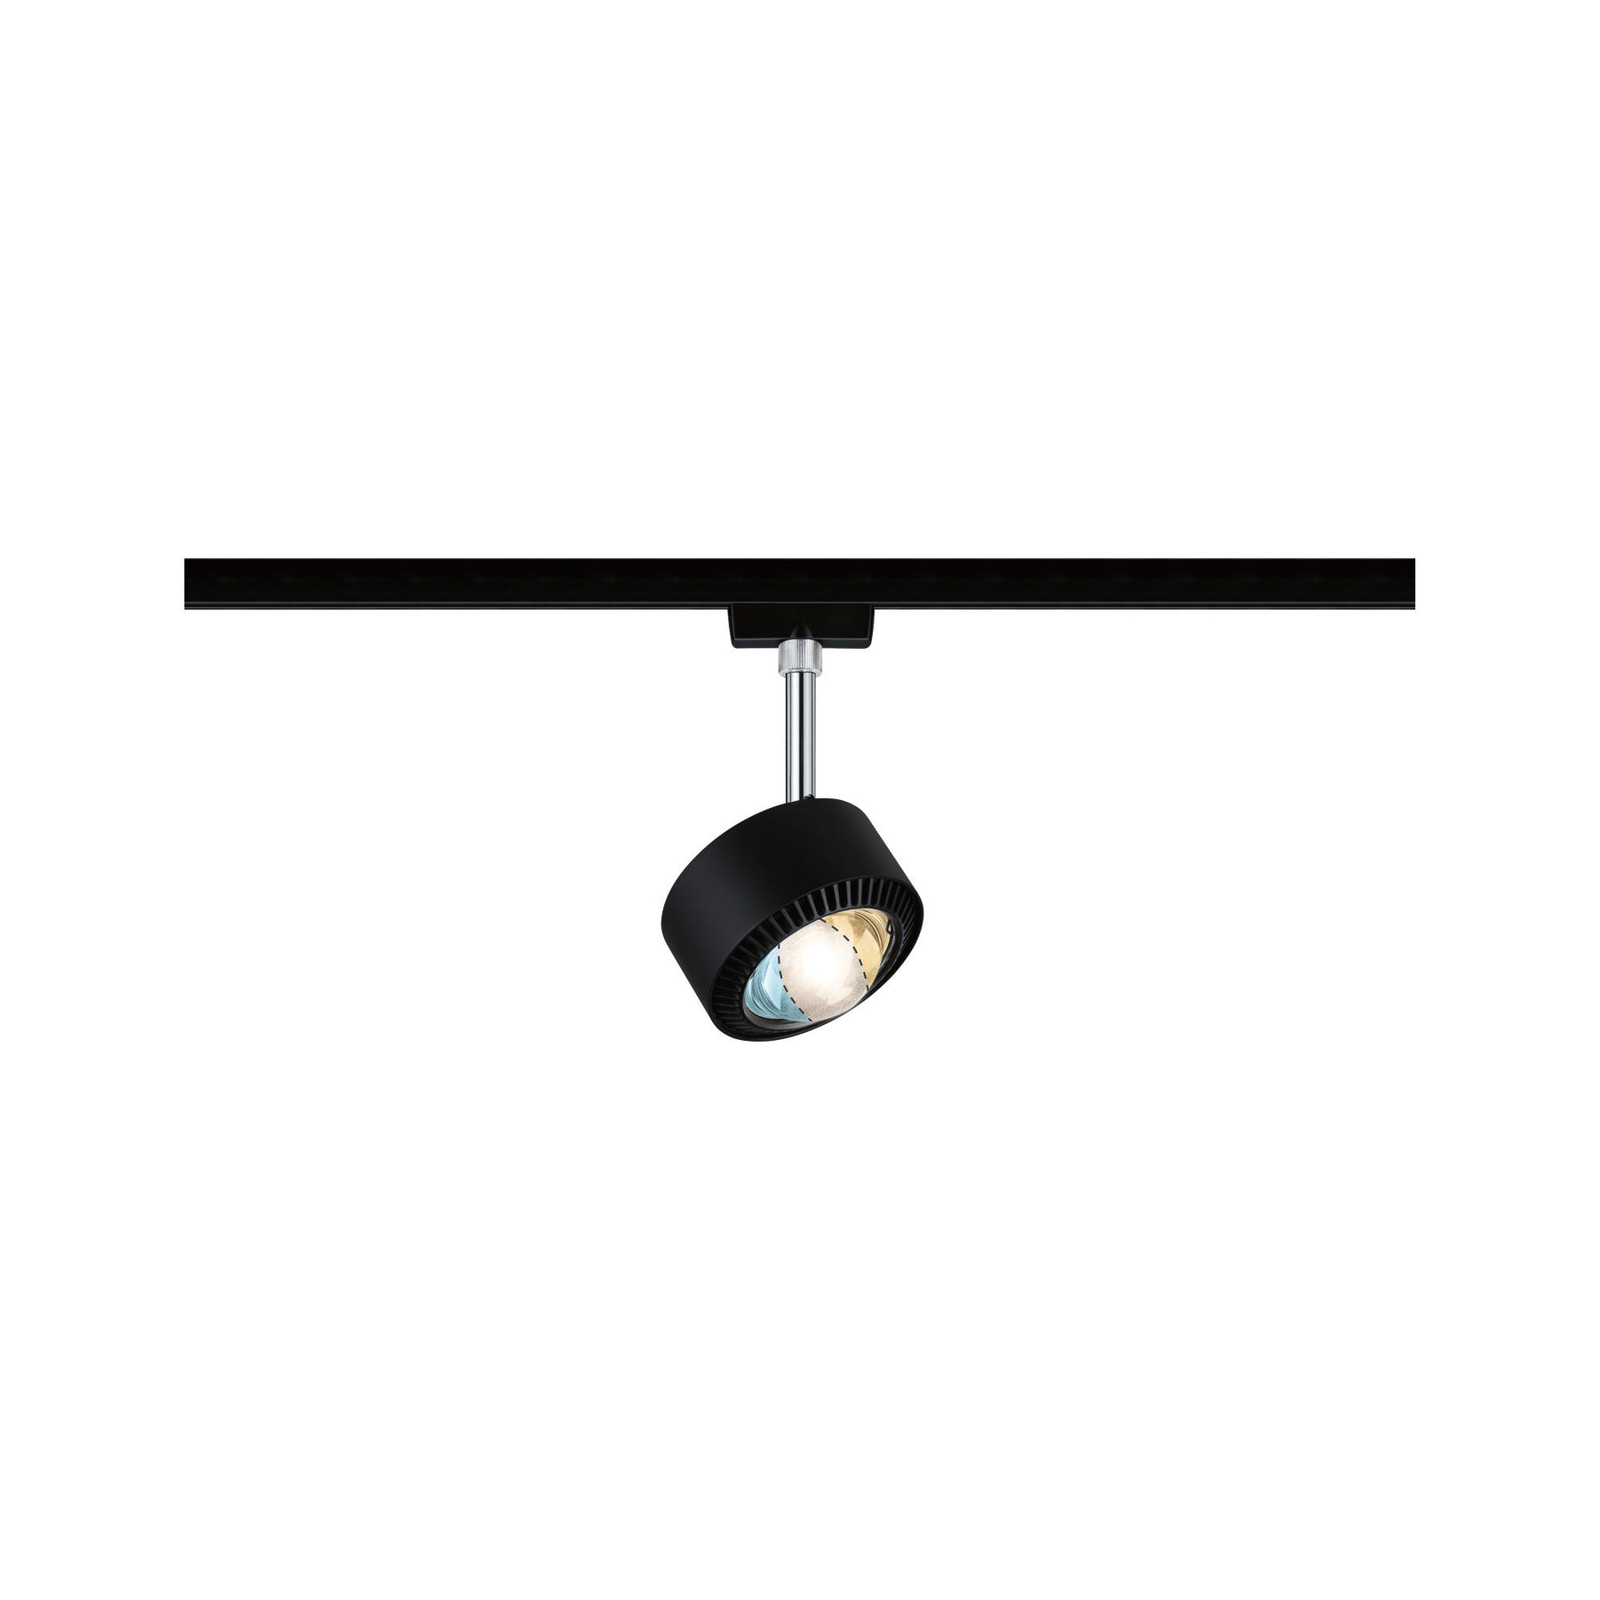 Paulmann URail Aldan LED reflektor, čierny matný, kov, CCT